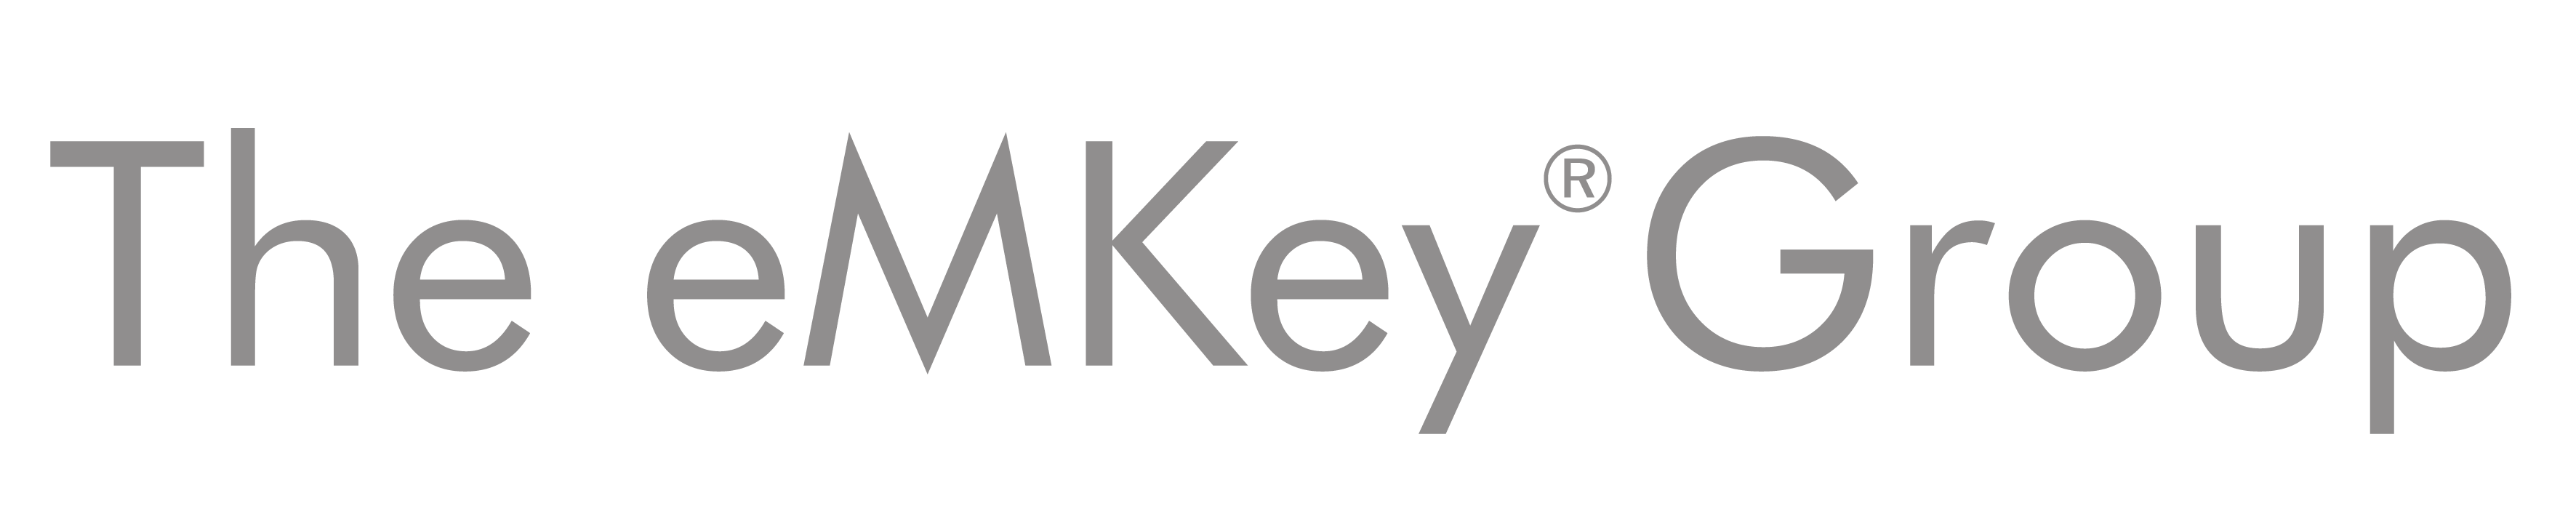 The eMKey Group